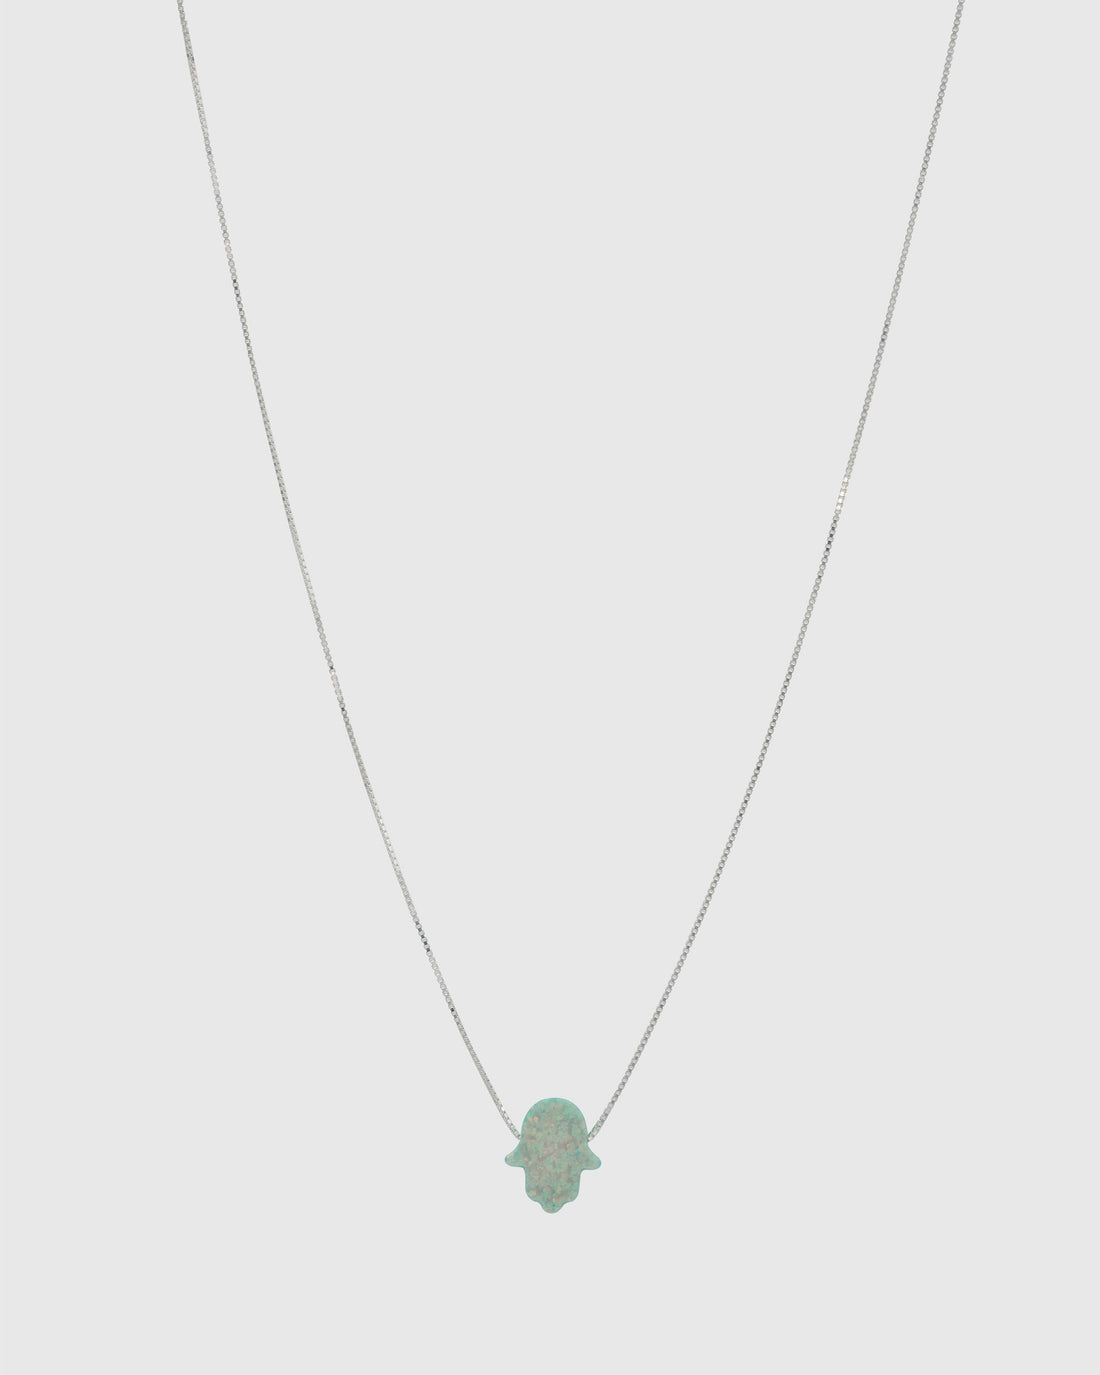 Teal Opal Hamsa Necklace